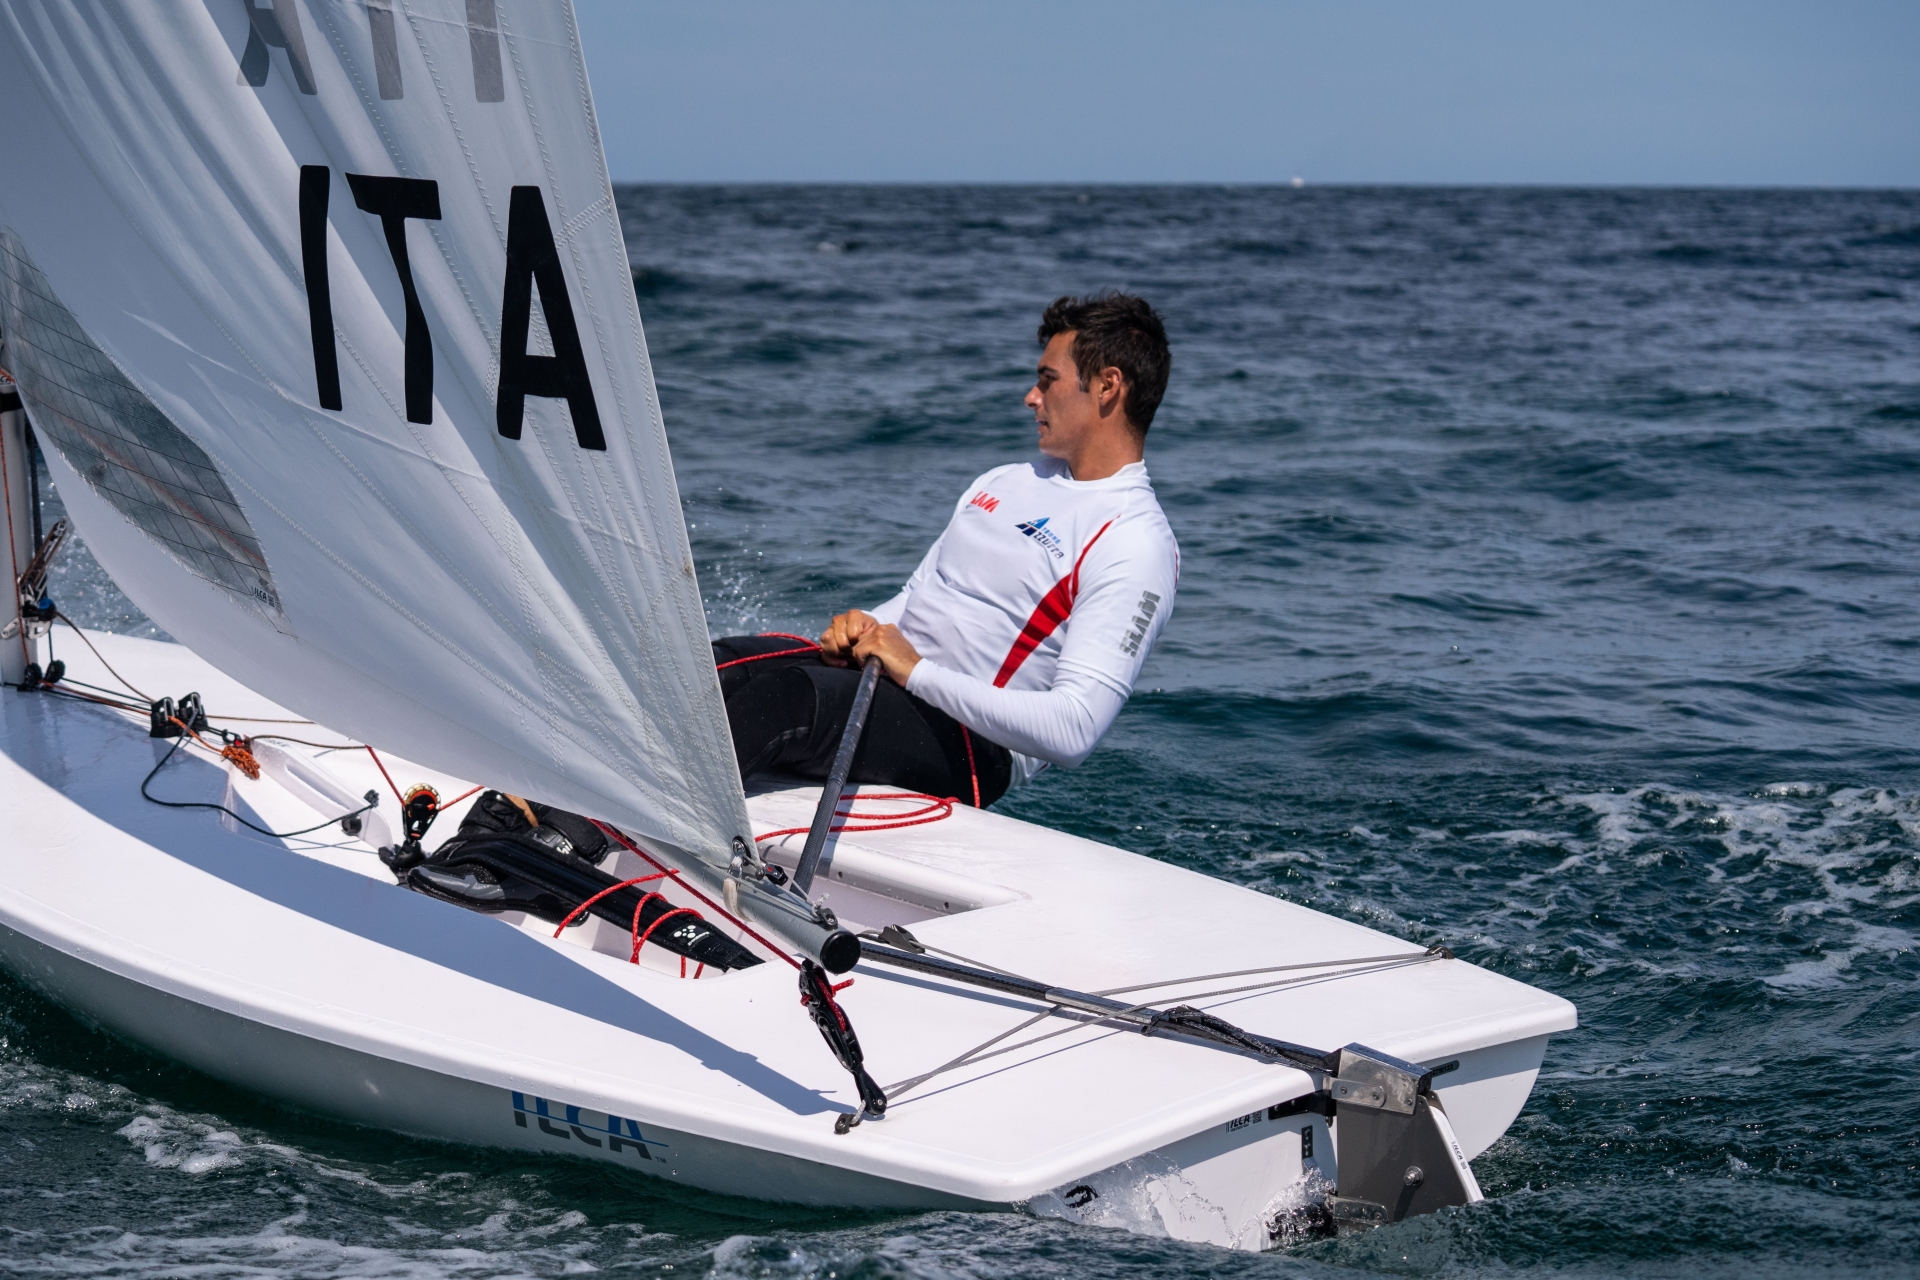 Excellent result for Cesare Barabino at the Kieler Woche - News - Yacht Club Costa Smeralda